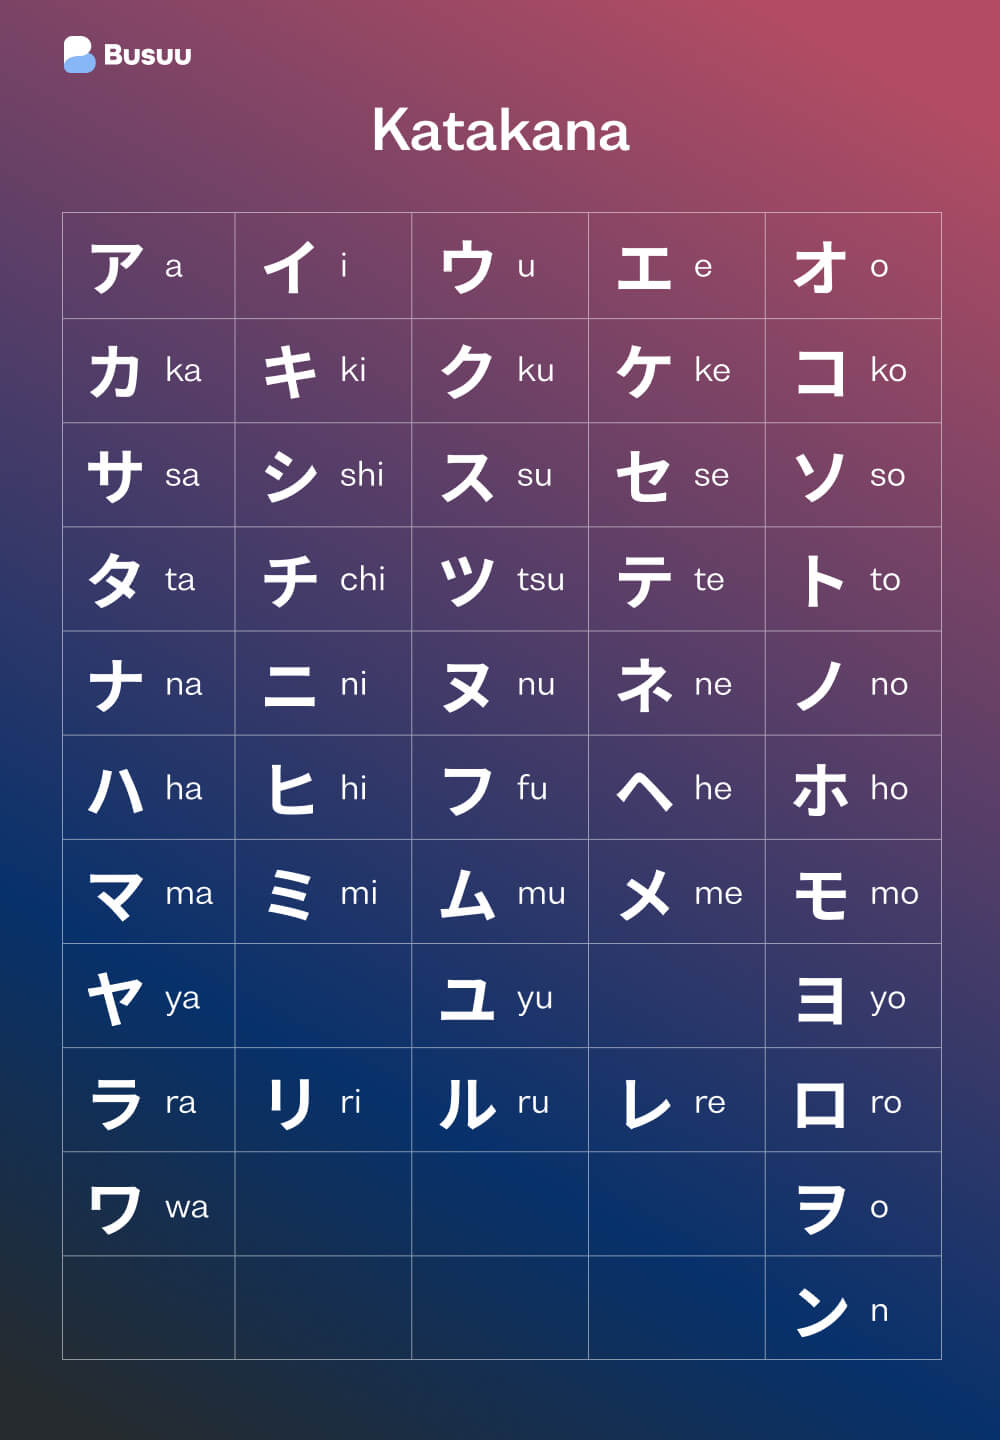 japanese calligraphy alphabet